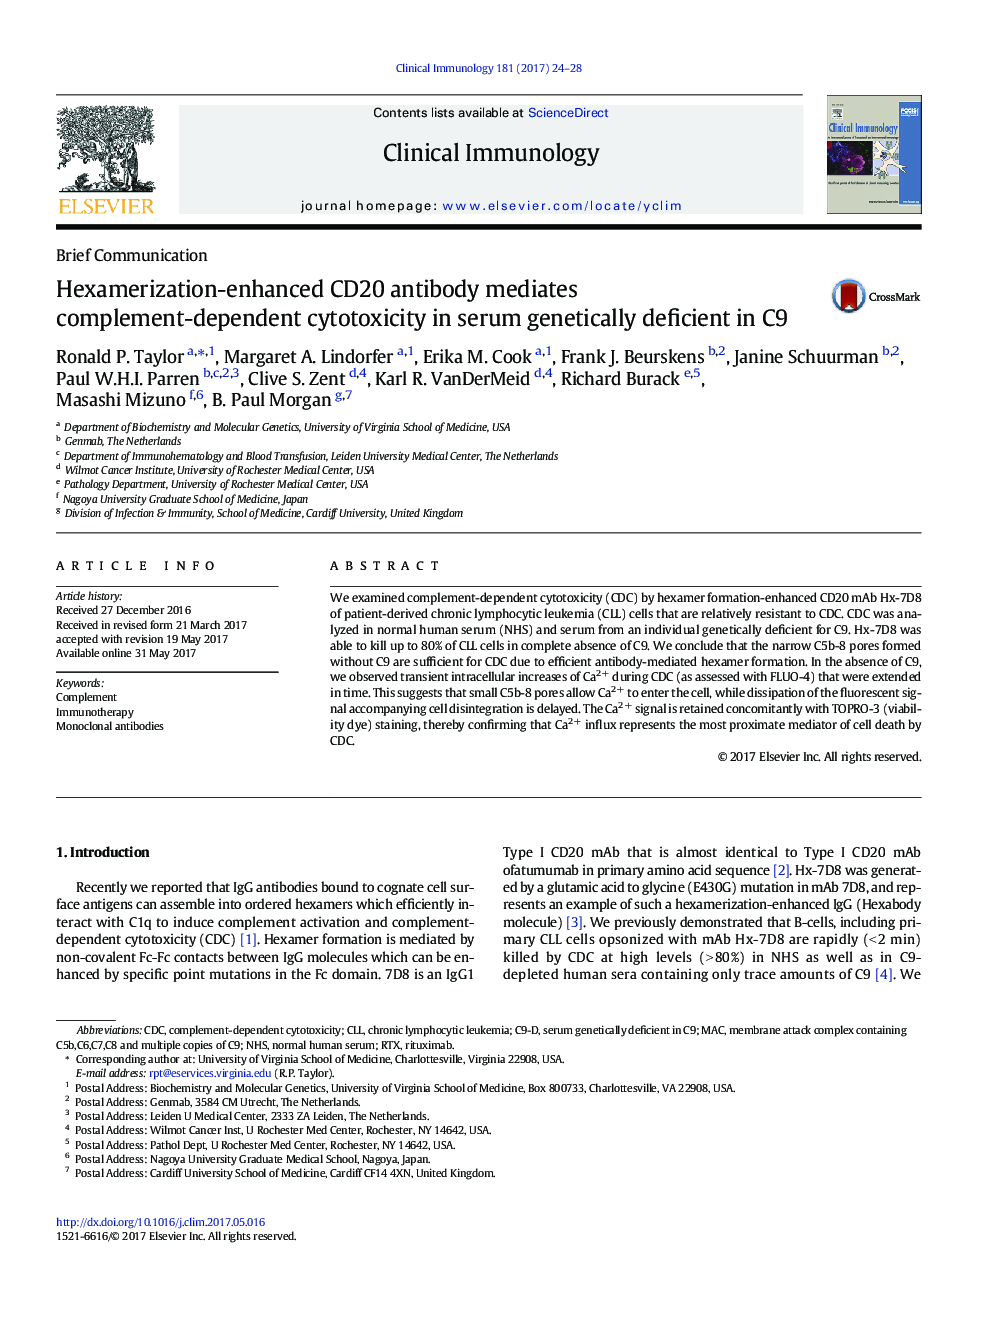 Hexamerization-enhanced CD20 antibody mediates complement-dependent cytotoxicity in serum genetically deficient in C9